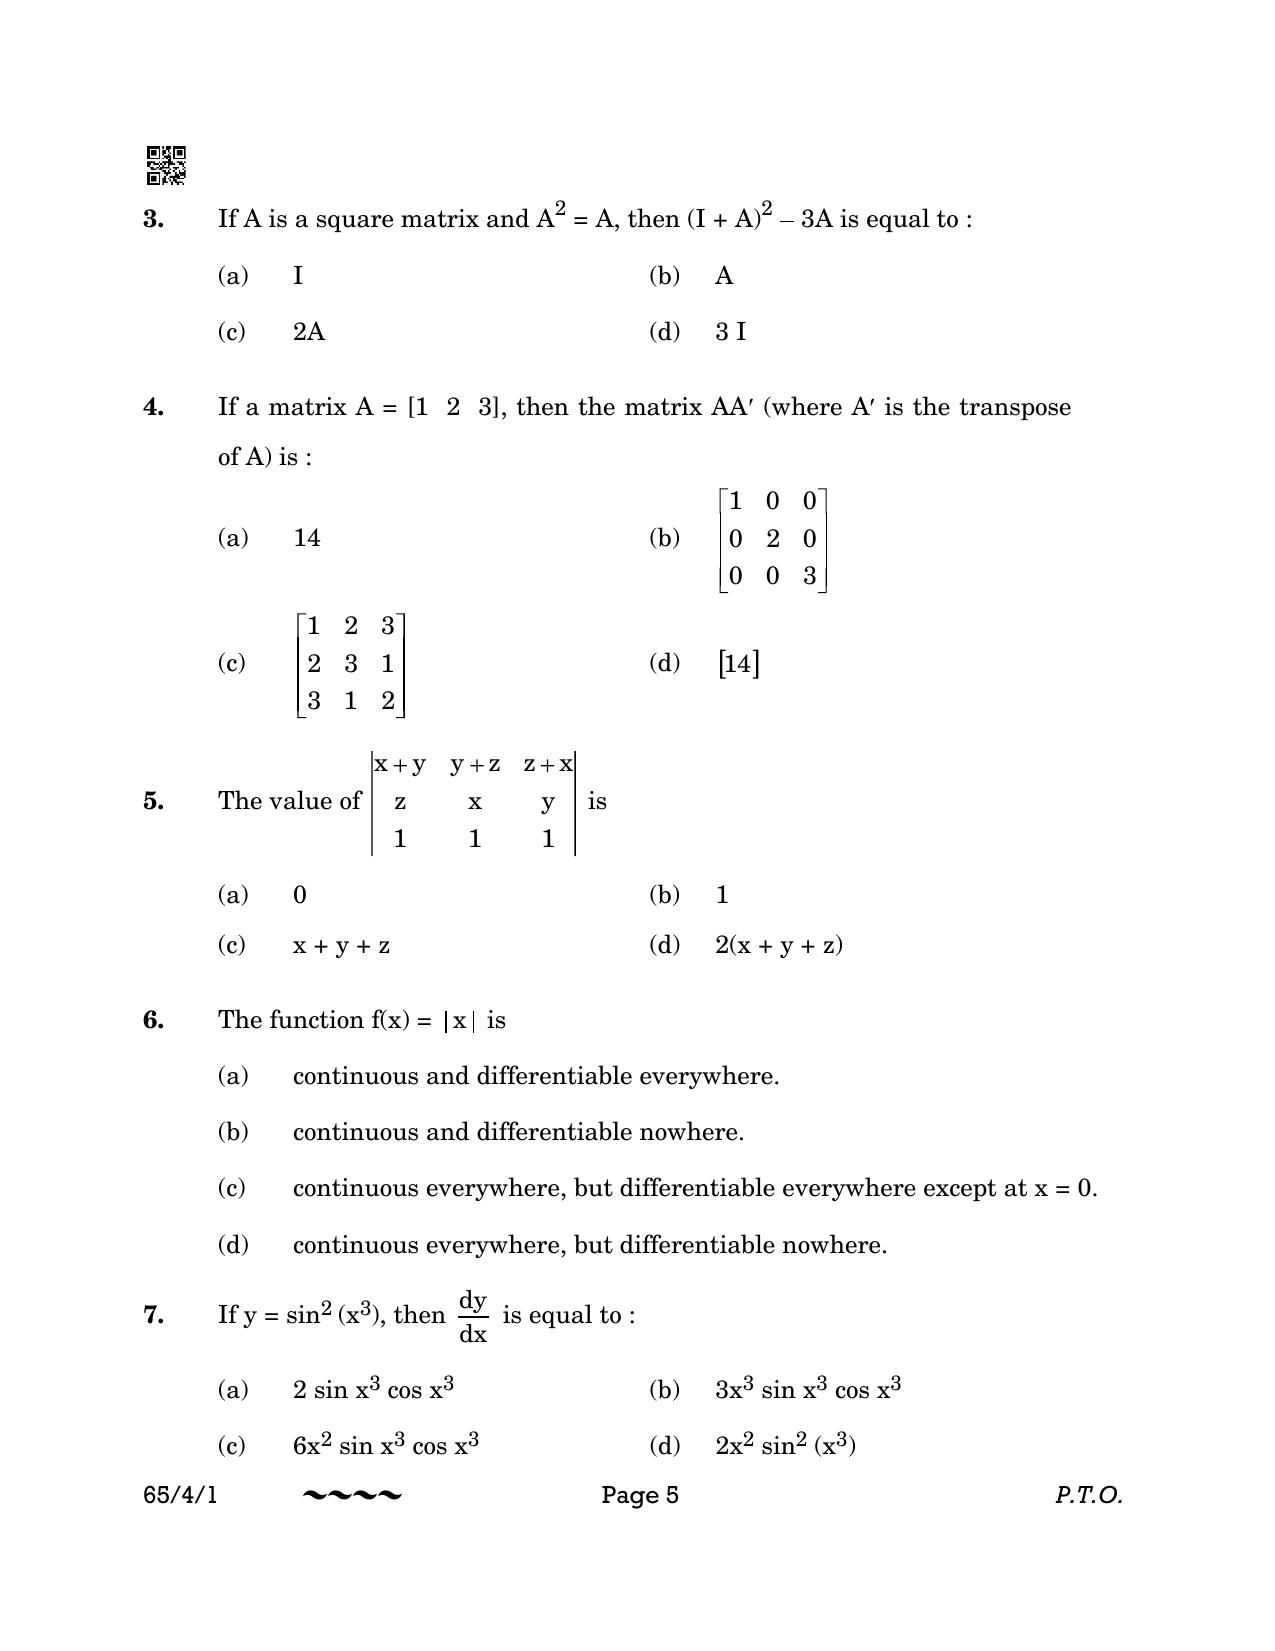 CBSE Class 12 65-4-1 MATHEMATICS 2023 Question Paper - Page 5